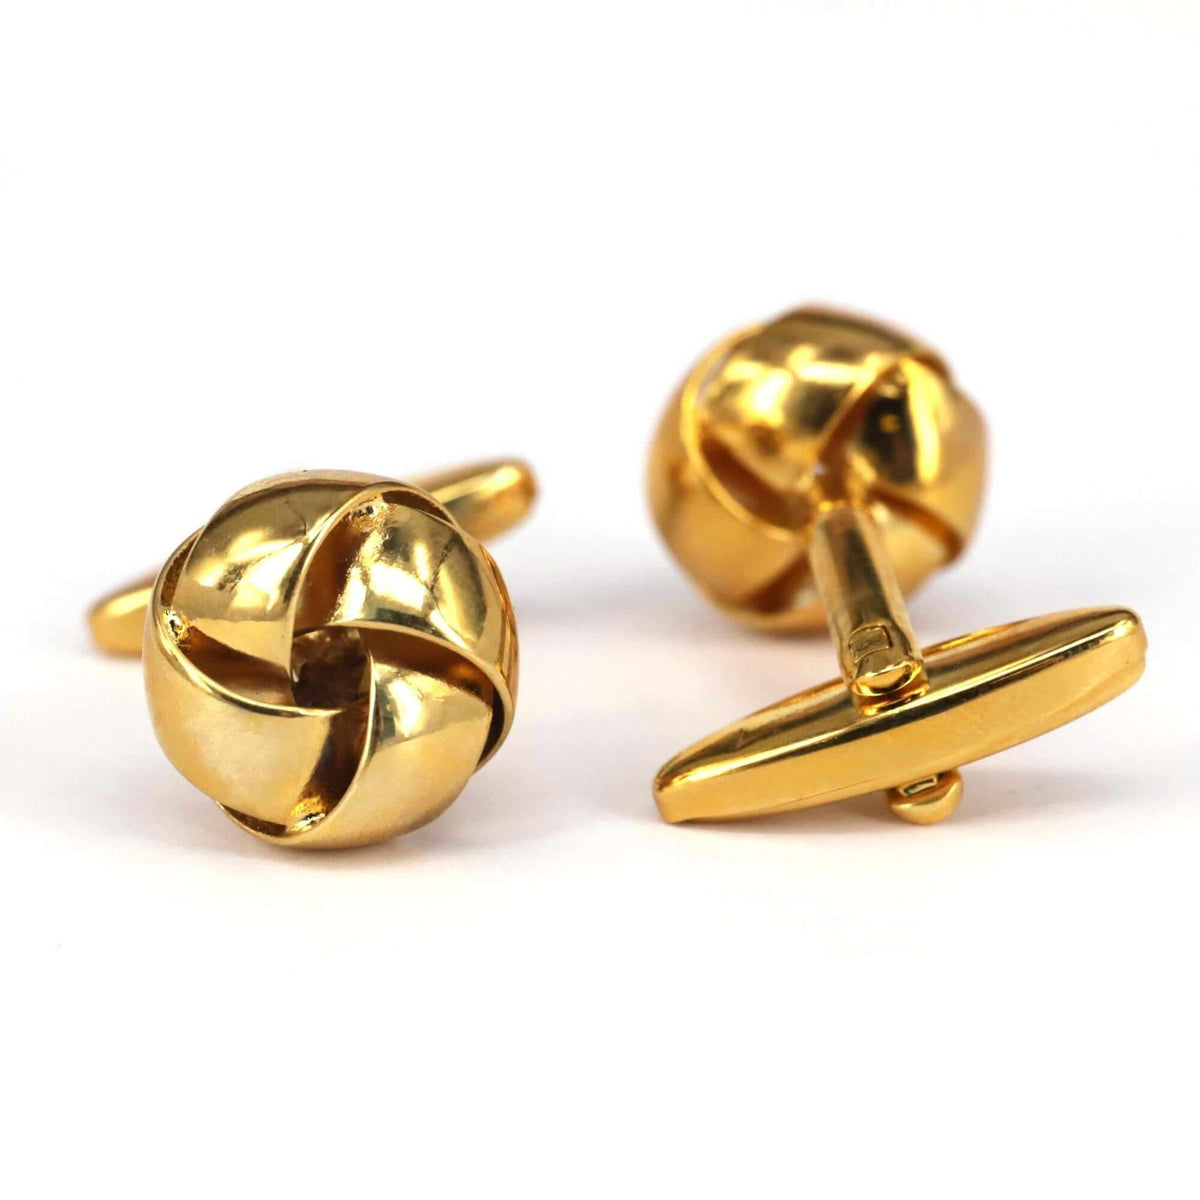 Big Knot in Gold Cufflinks-Cufflinks.com.sg